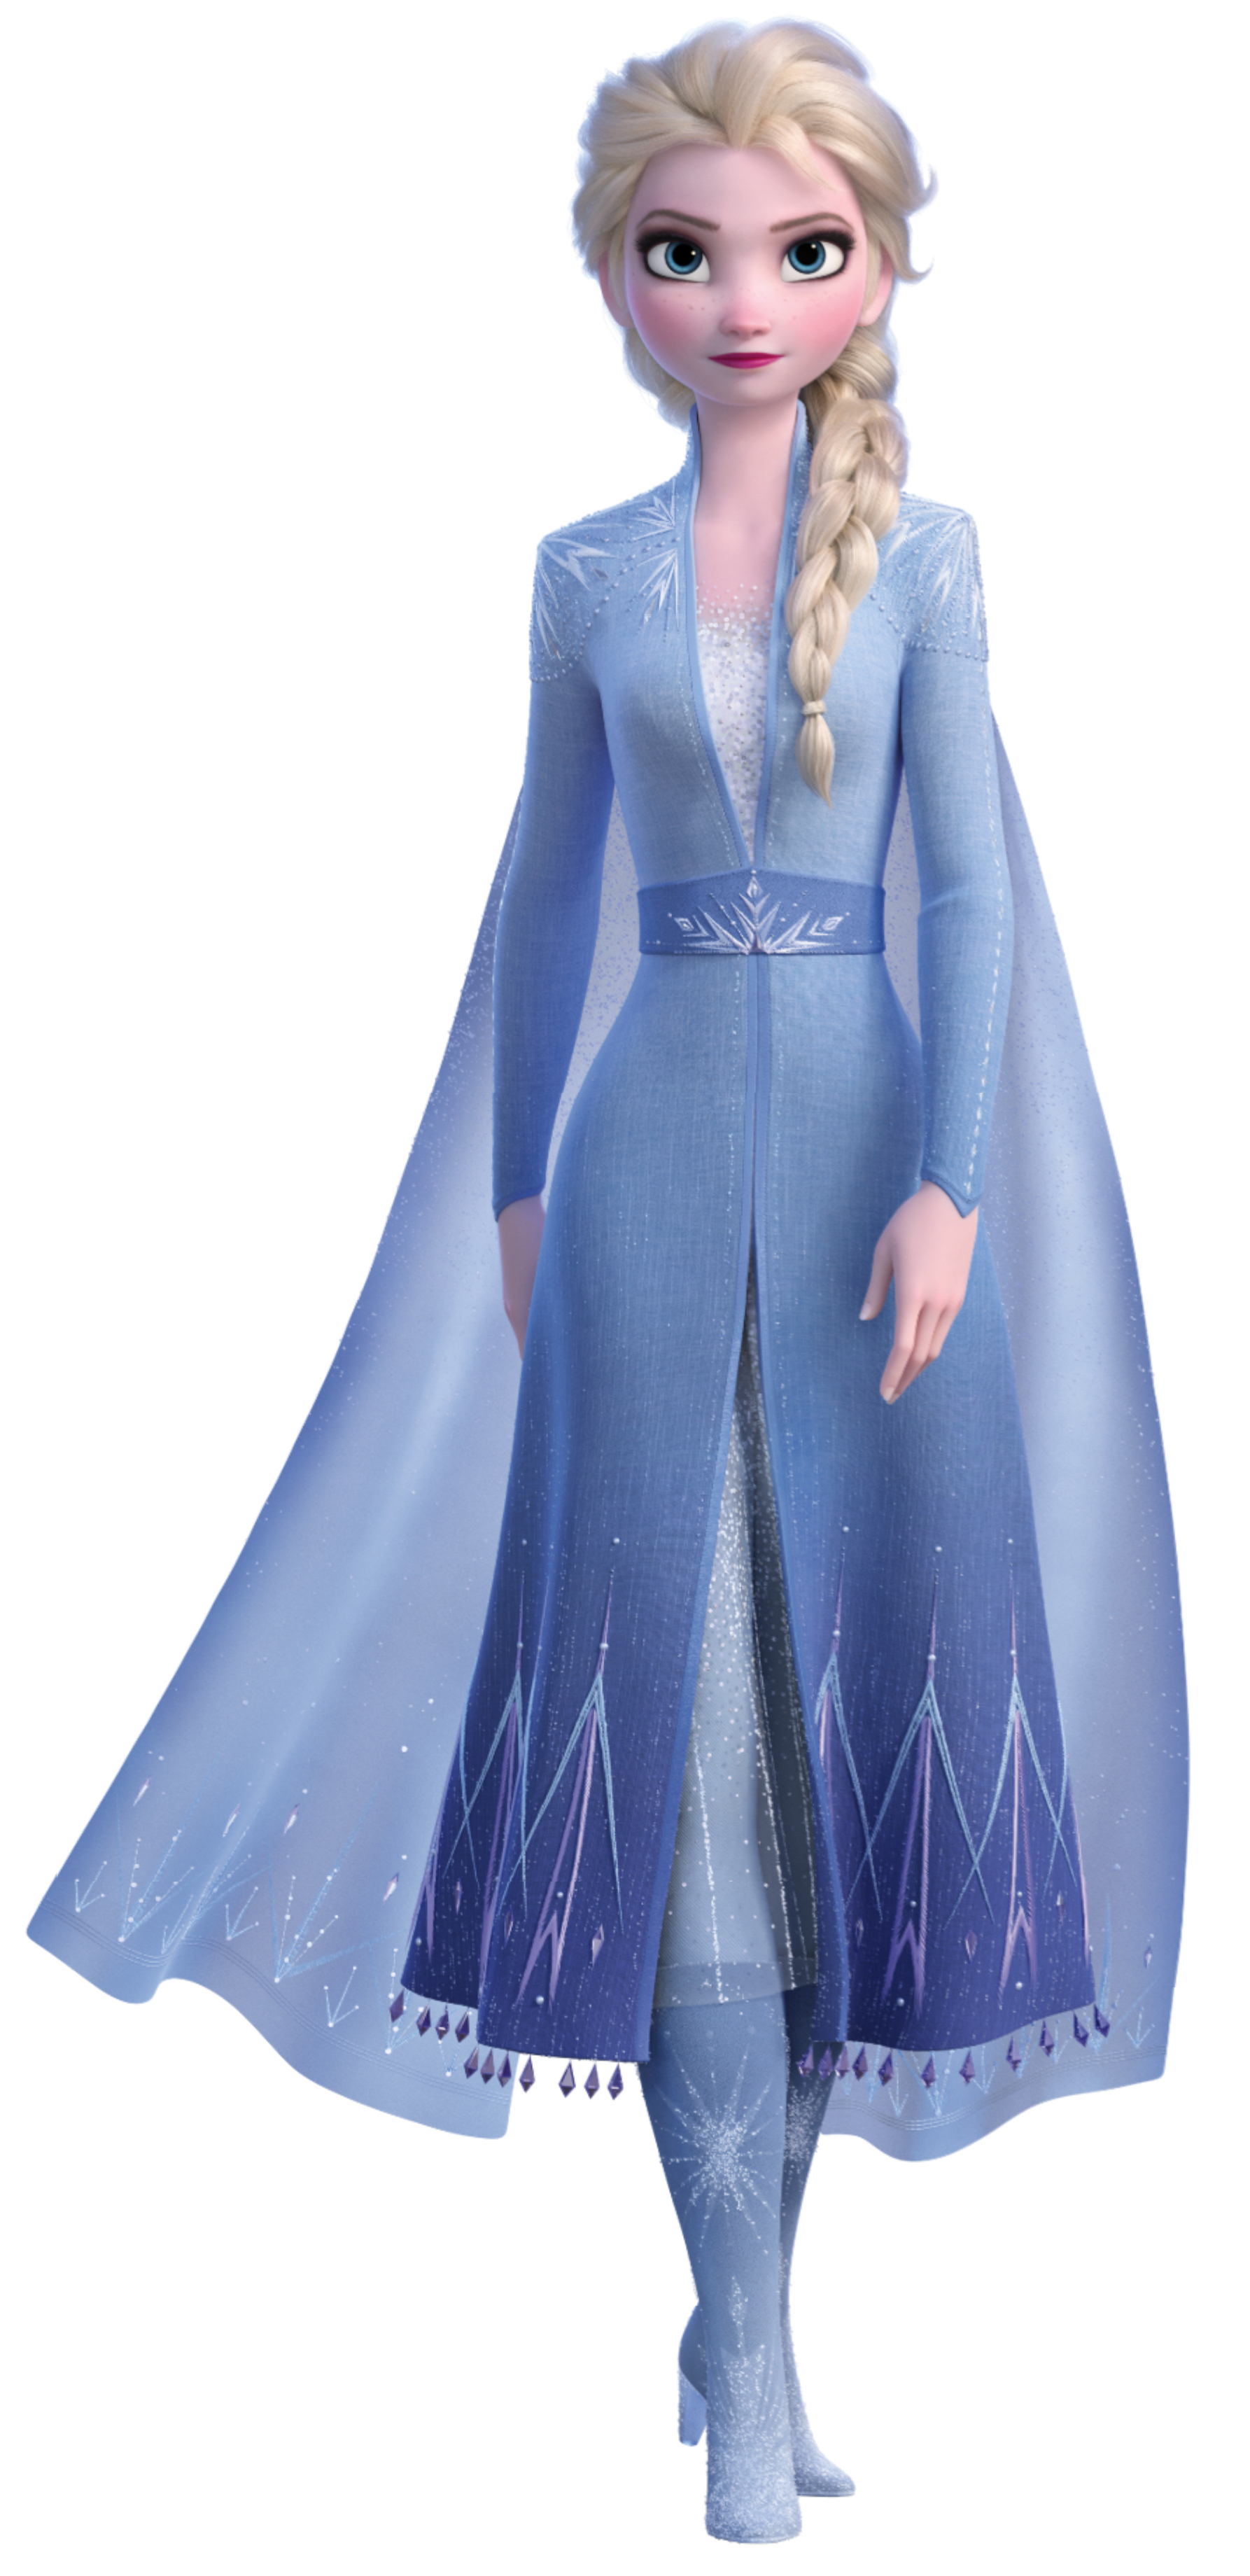 Elsa Pose - Frozen Photo (43035082) - Fanpop